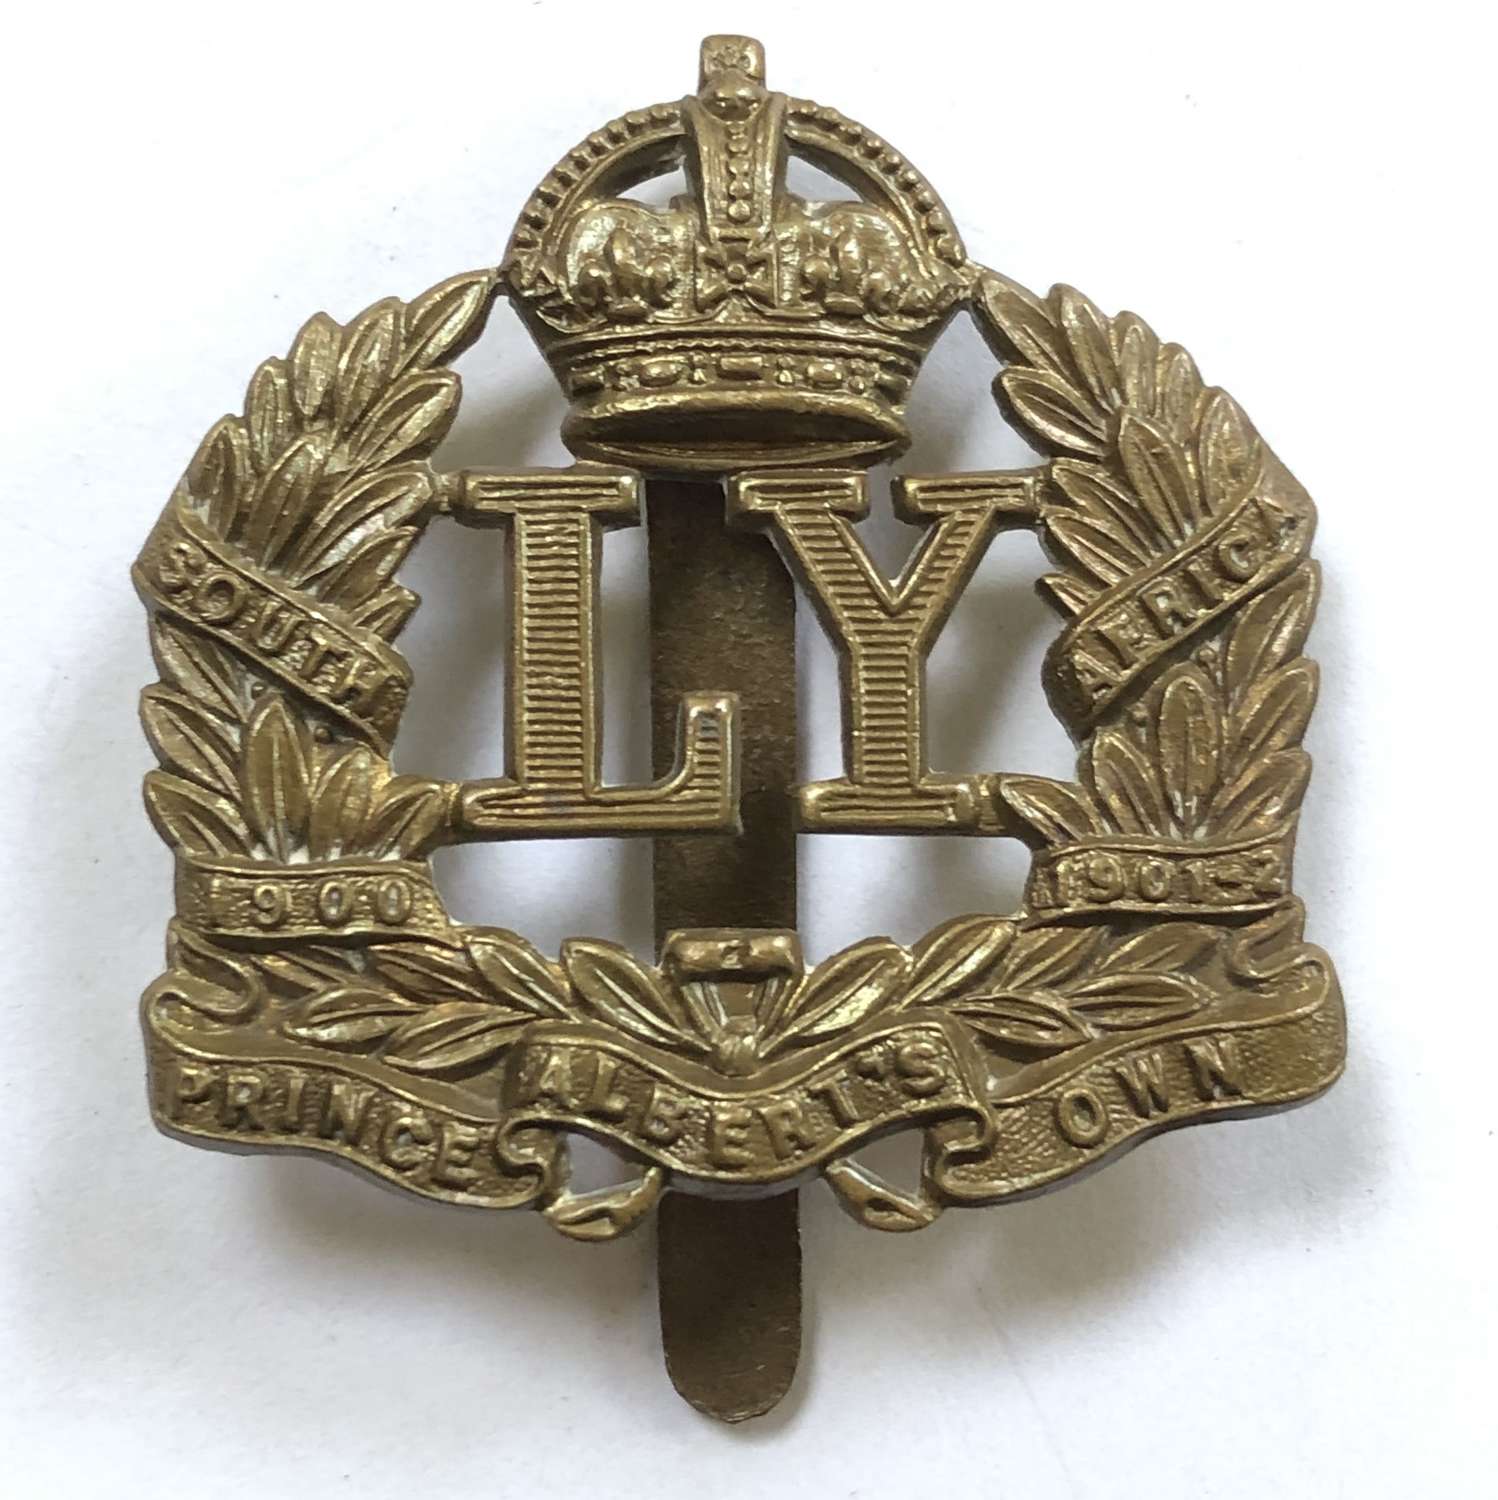 Leicestershire Yeomanry cap badge circa 1908-16